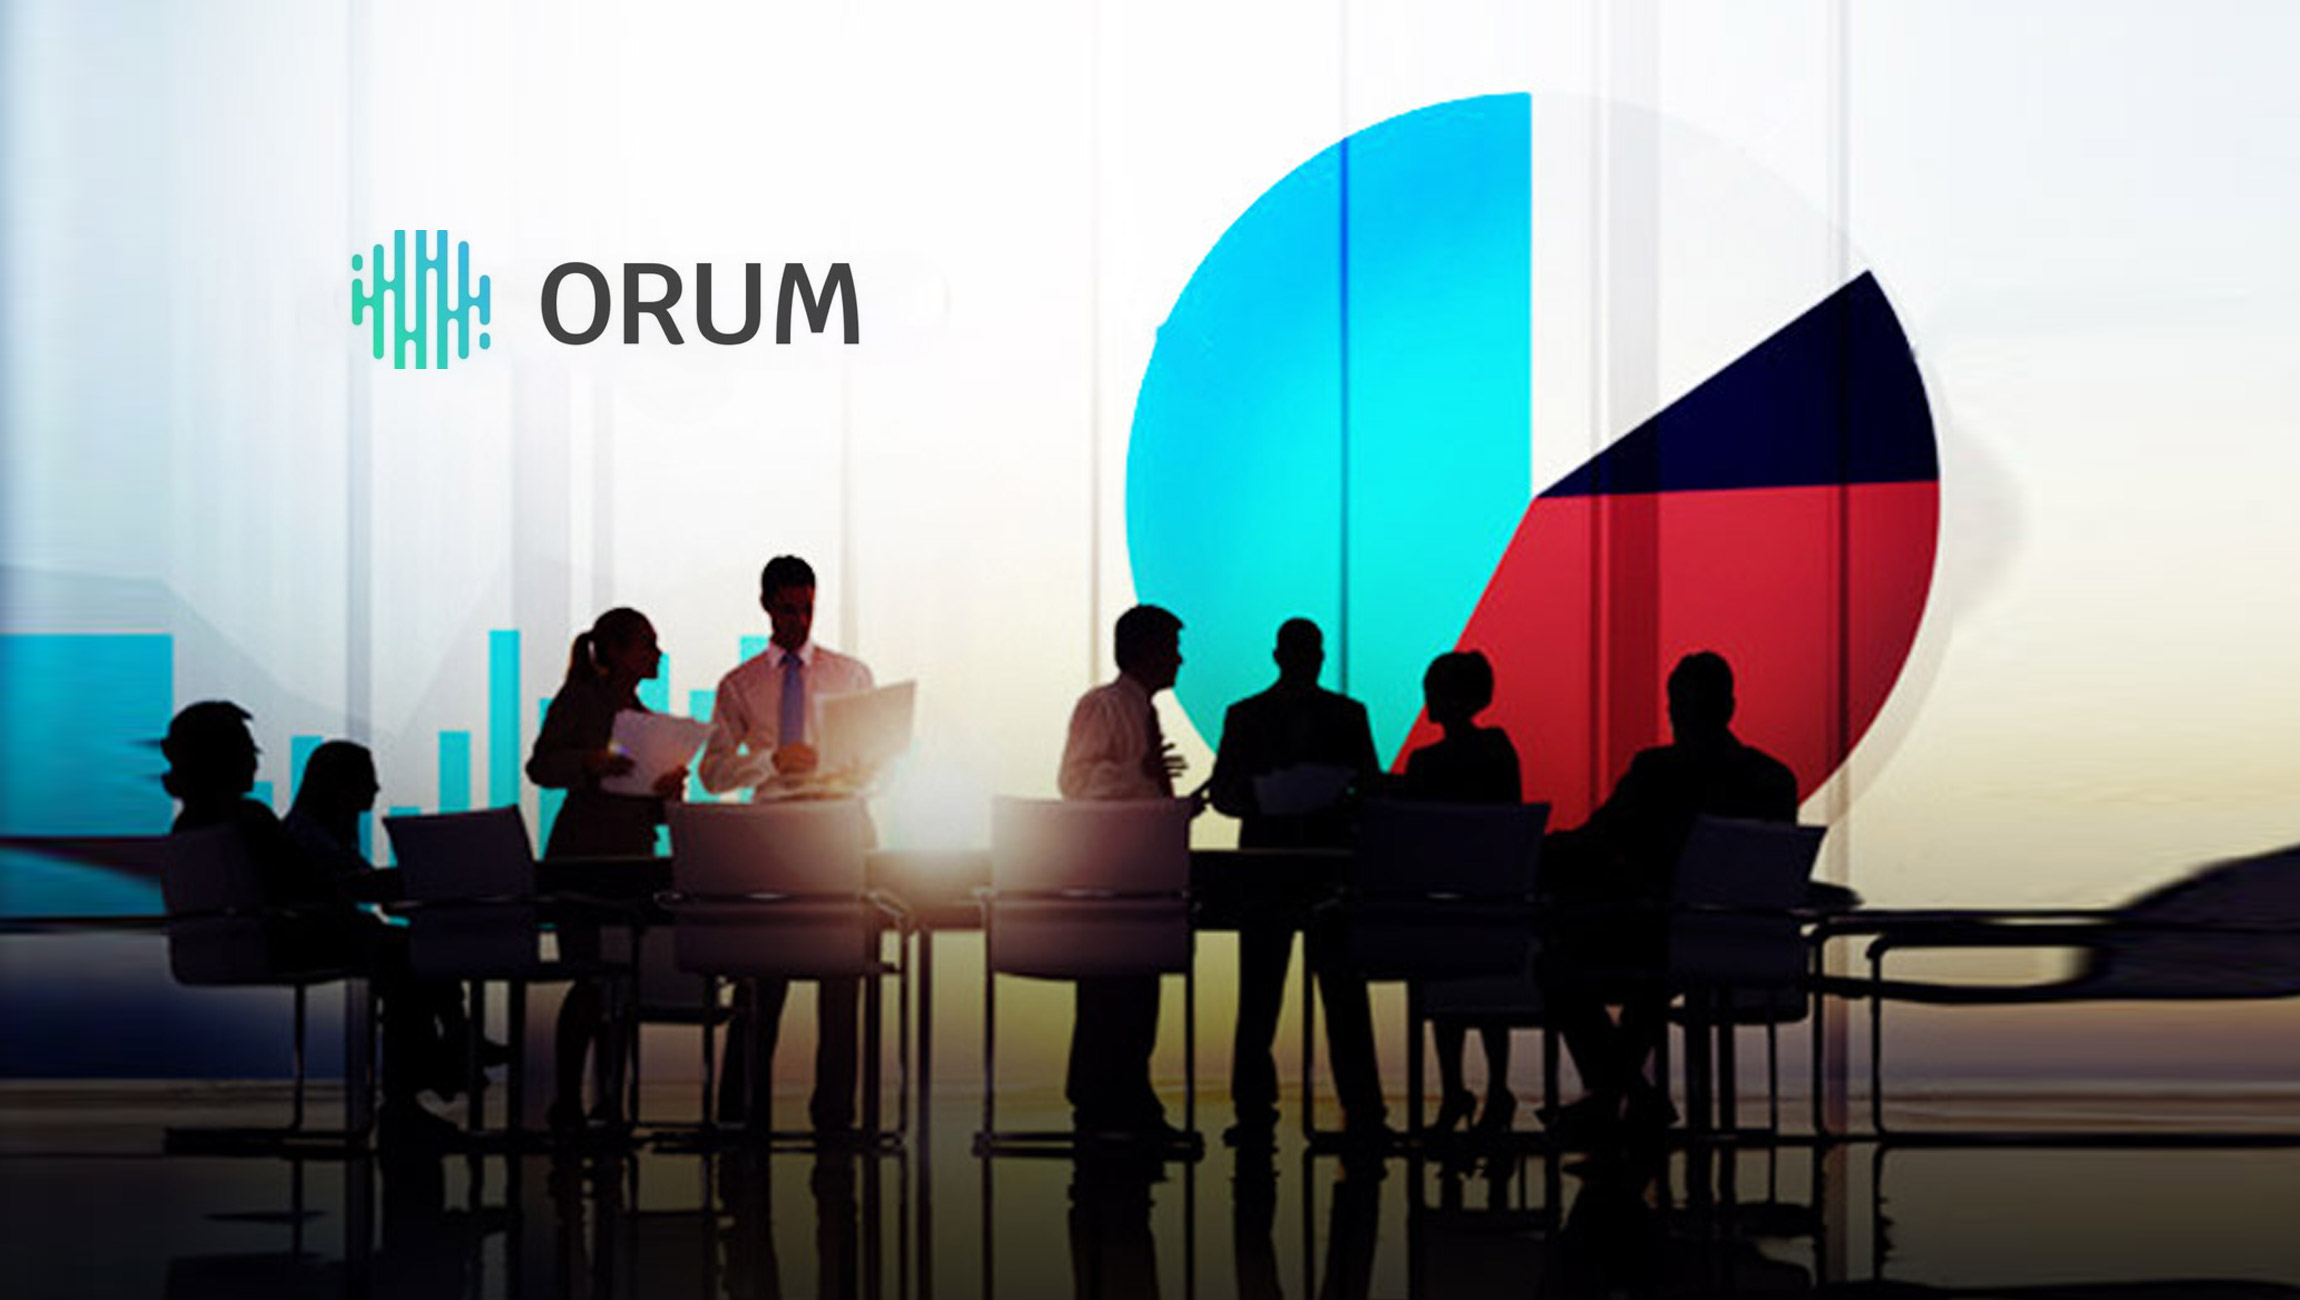 Orum Launches The World's First 'Hands-free' Enterprise PowerDialer